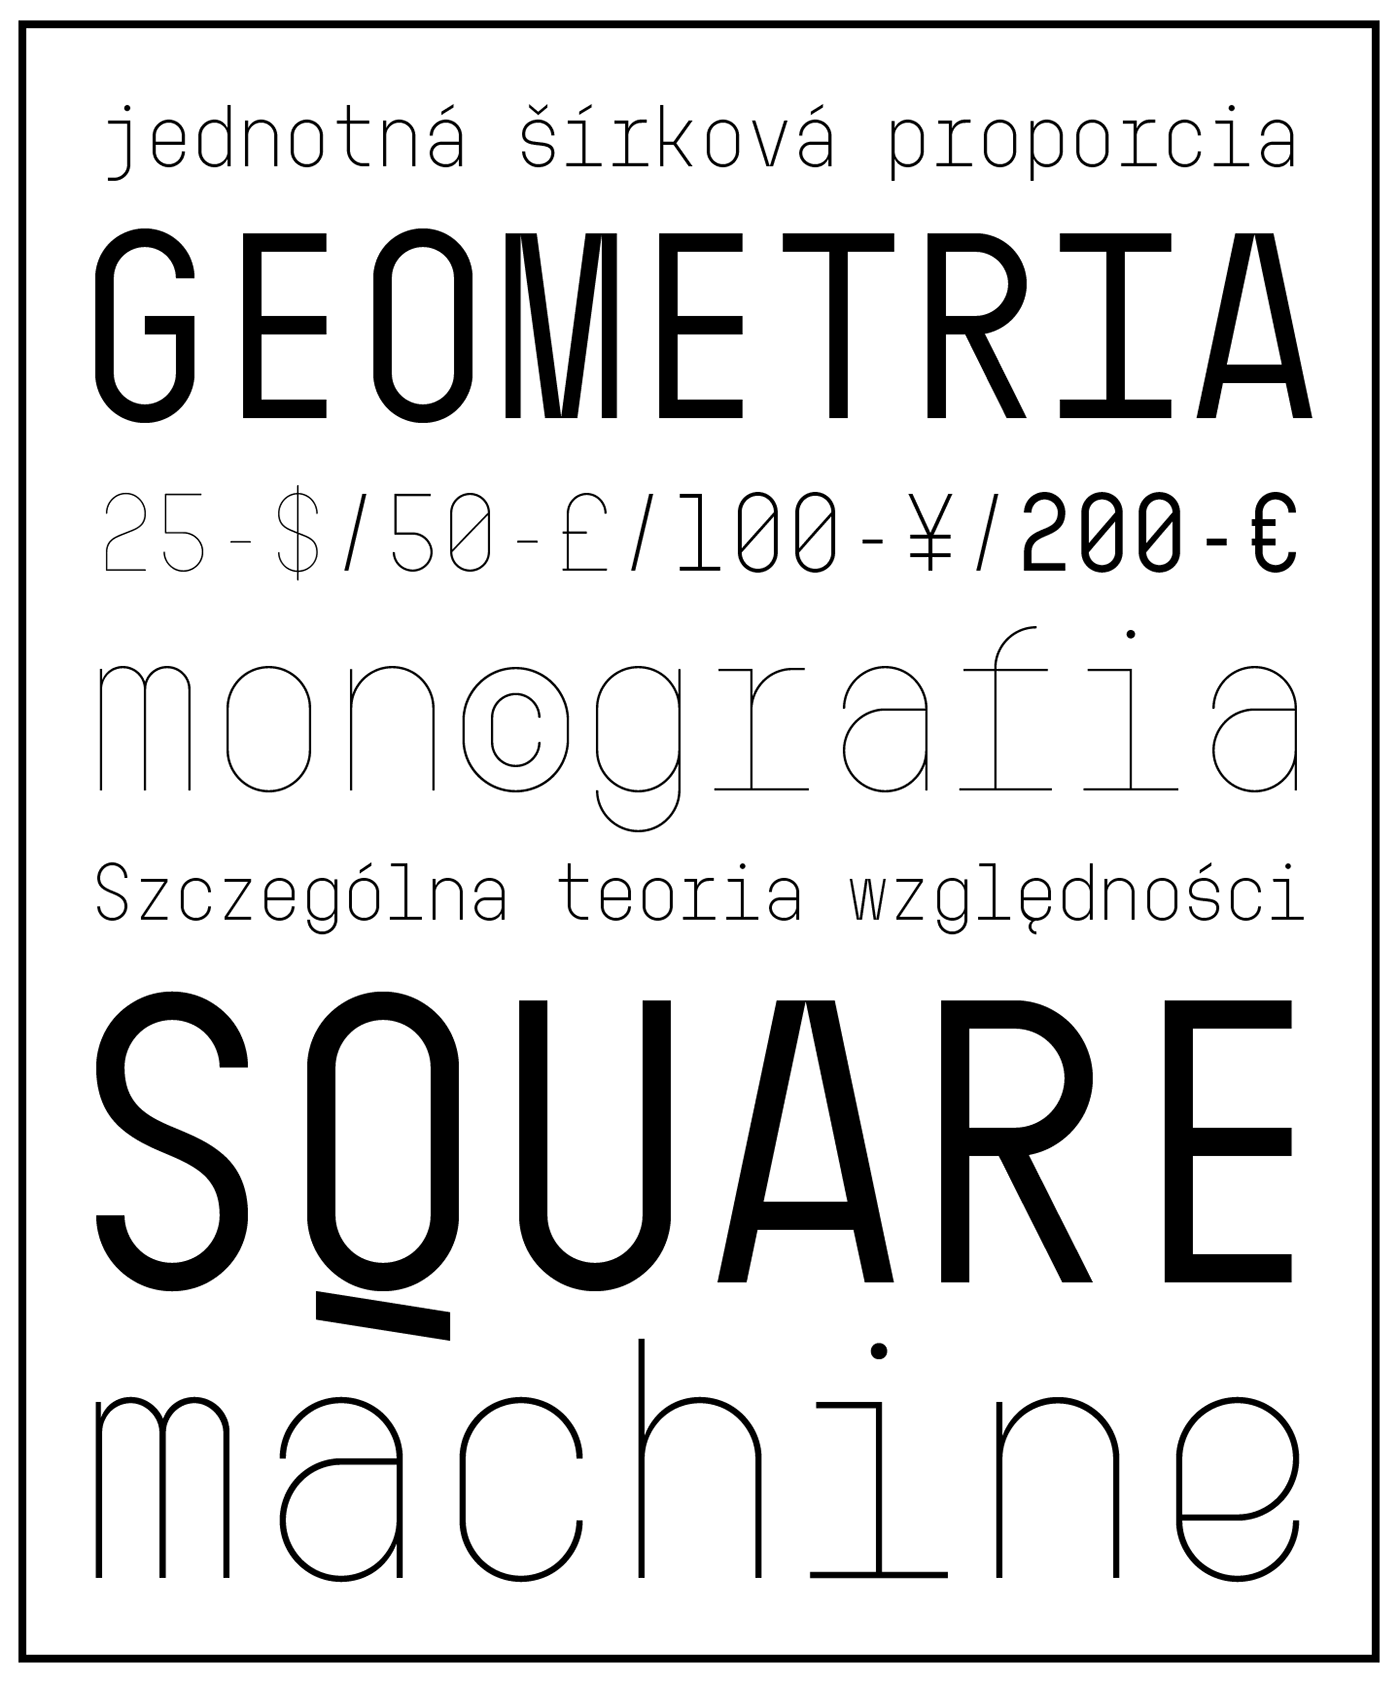 technik Carnoky Type monospace font type Display corporate linear monoline Mono magazine geometric